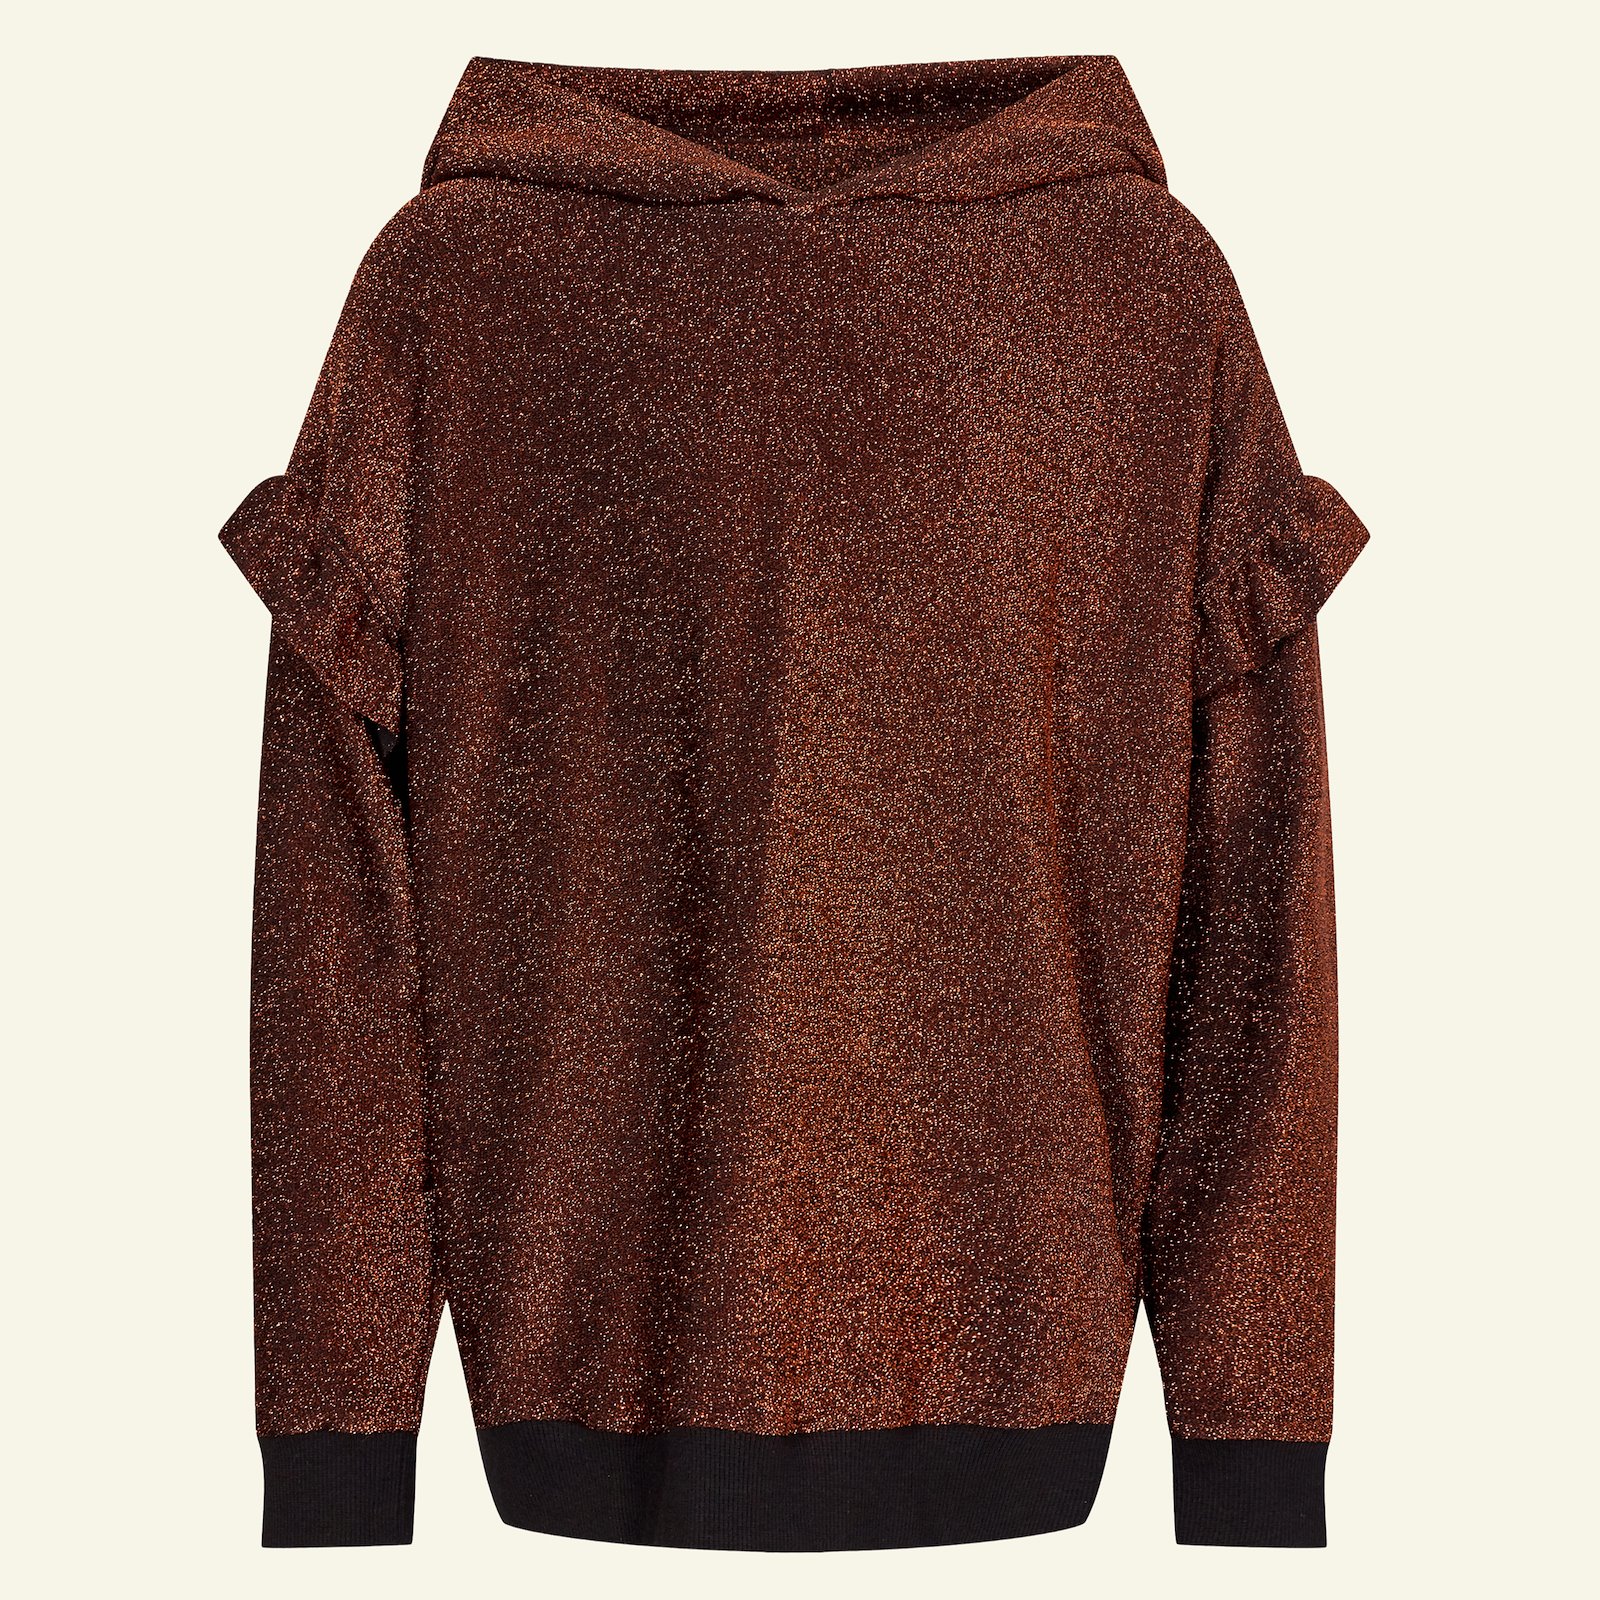 Sweatshirt w. hood + pocket, 116/6y p62020_272529_272436_sskit